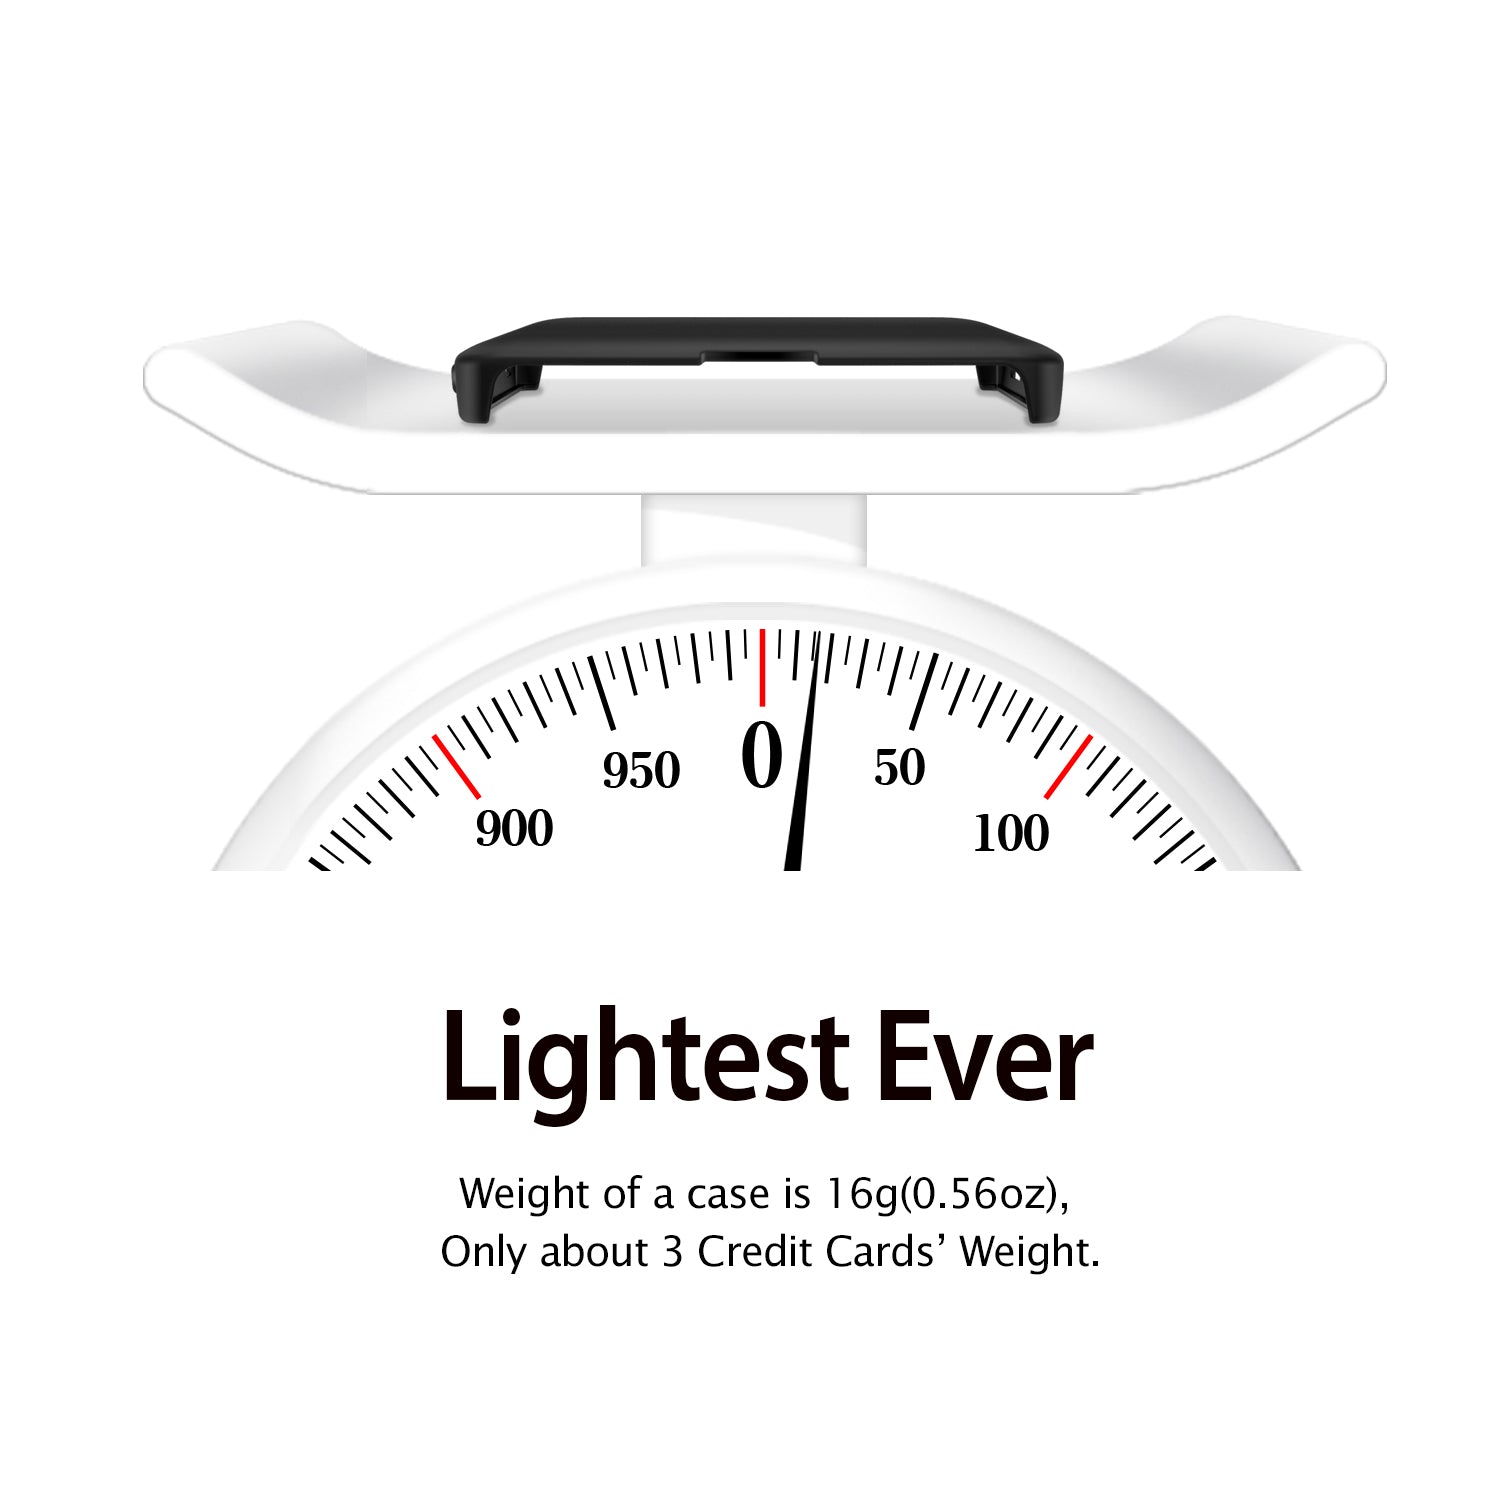 ringke slim thin lightweight hard pc case cover for google nexus 5 main lightest ever